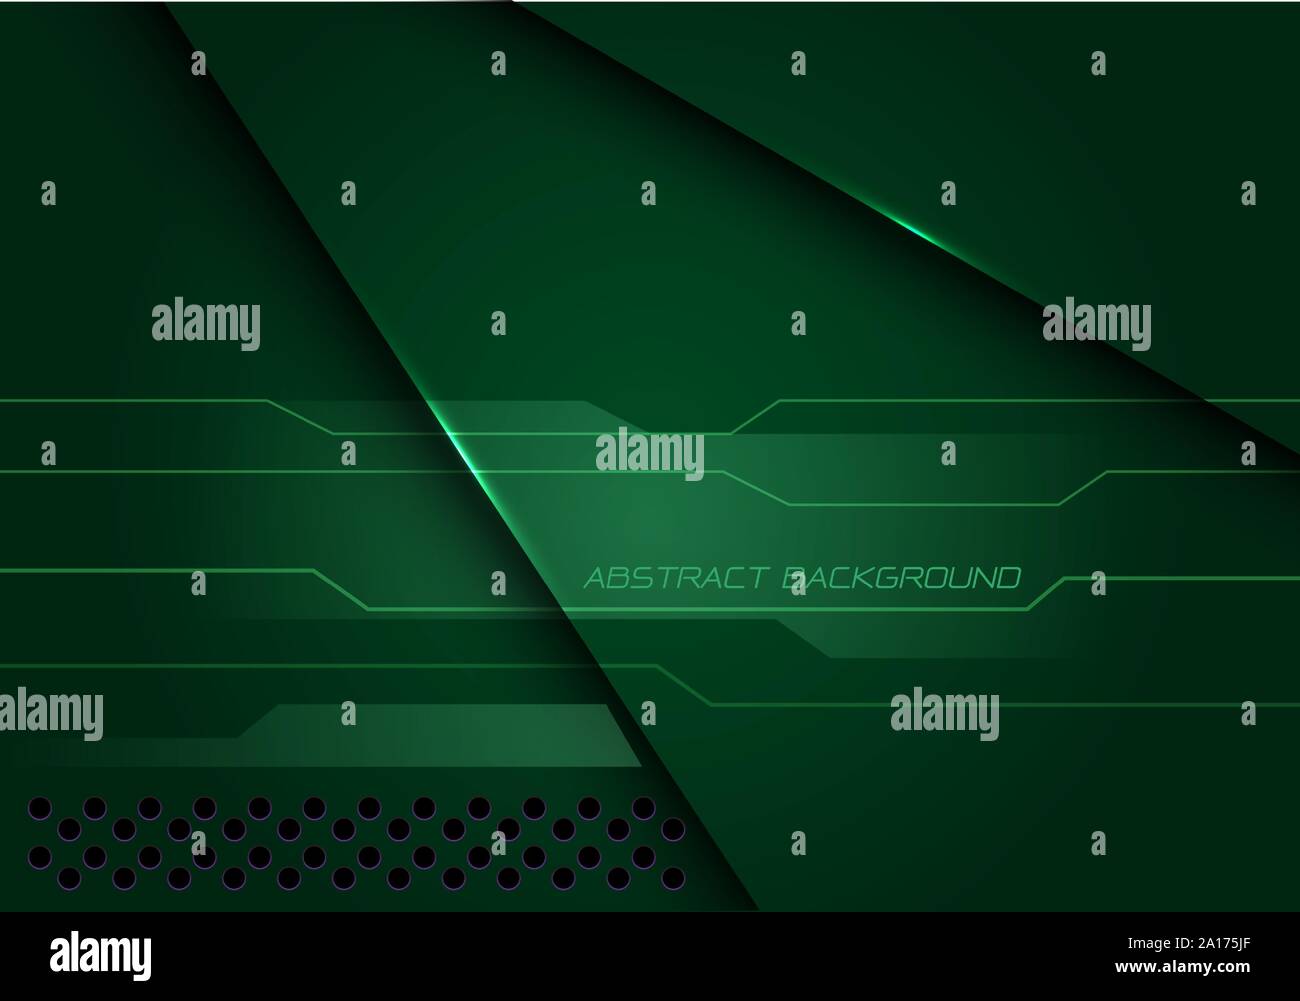 Abstract green metallic cyber chevauchement technologie futuriste moderne design background vector illustration. Illustration de Vecteur